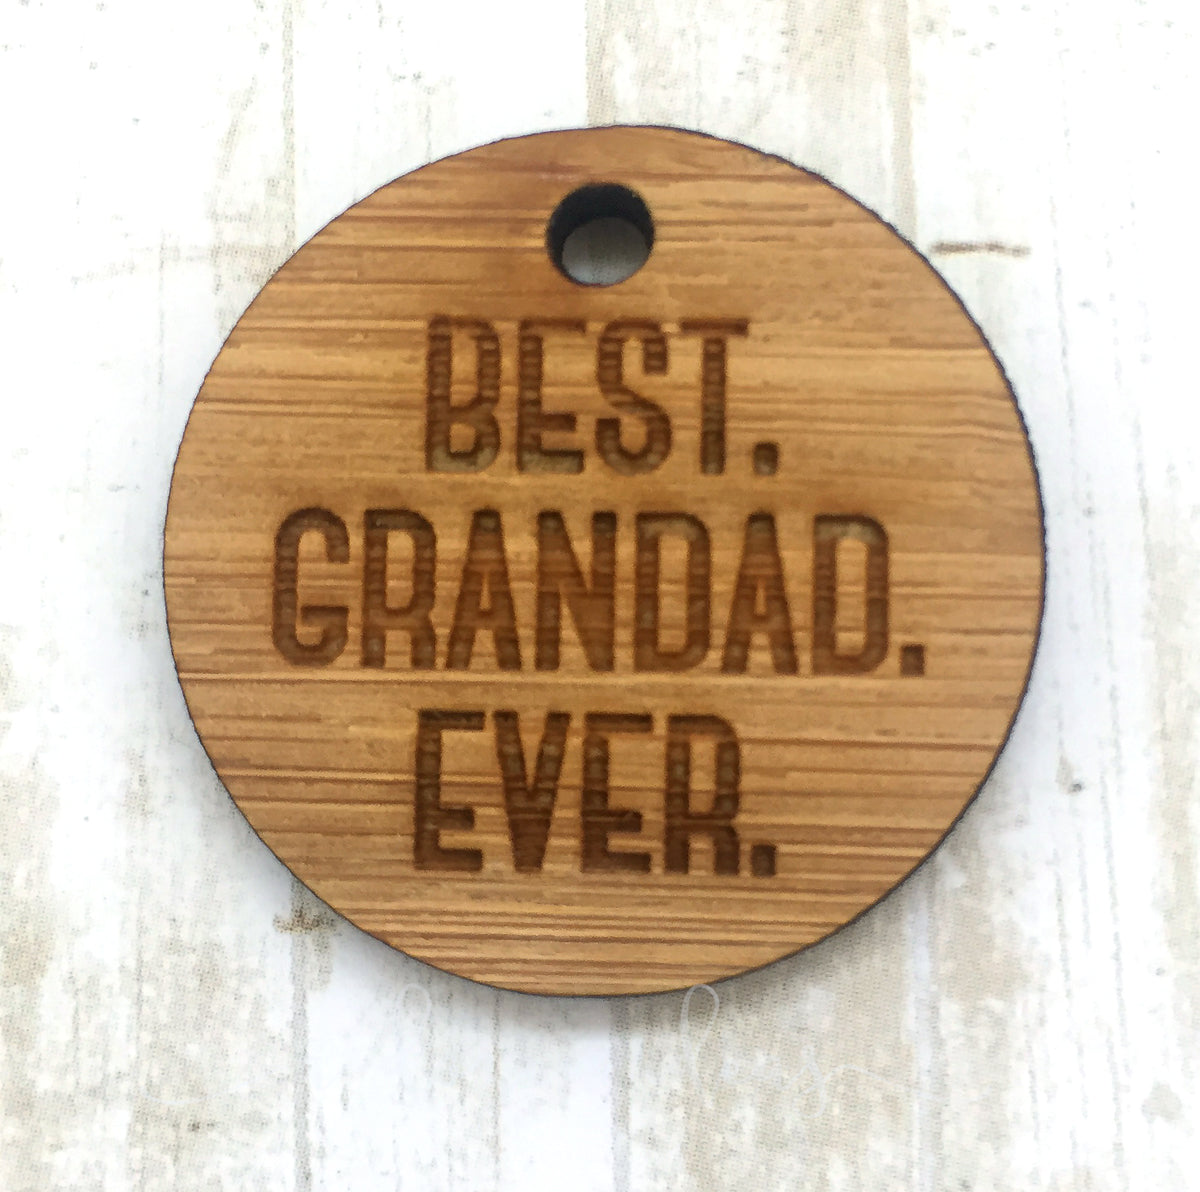 Add-on - Best Grandad Ever